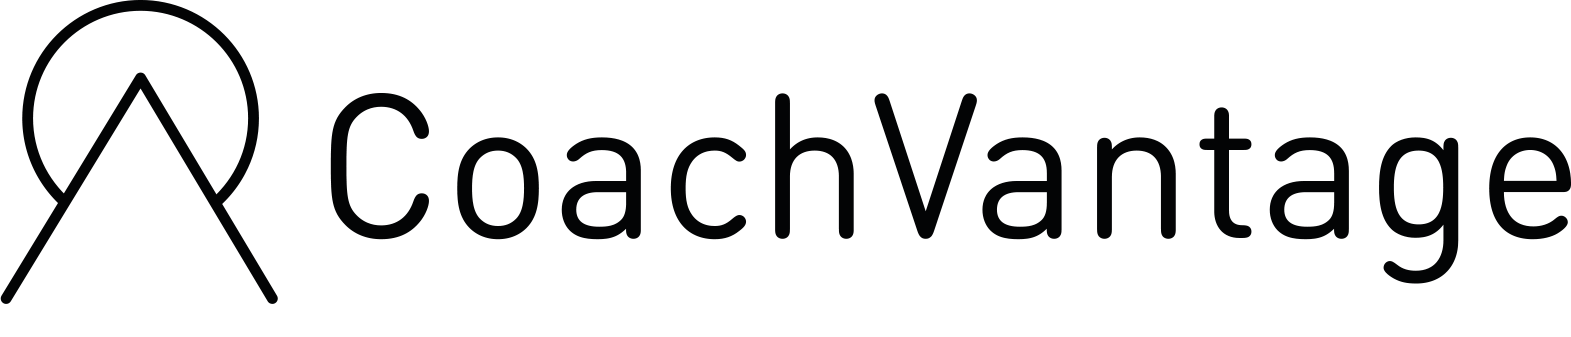 CoachVantage logo